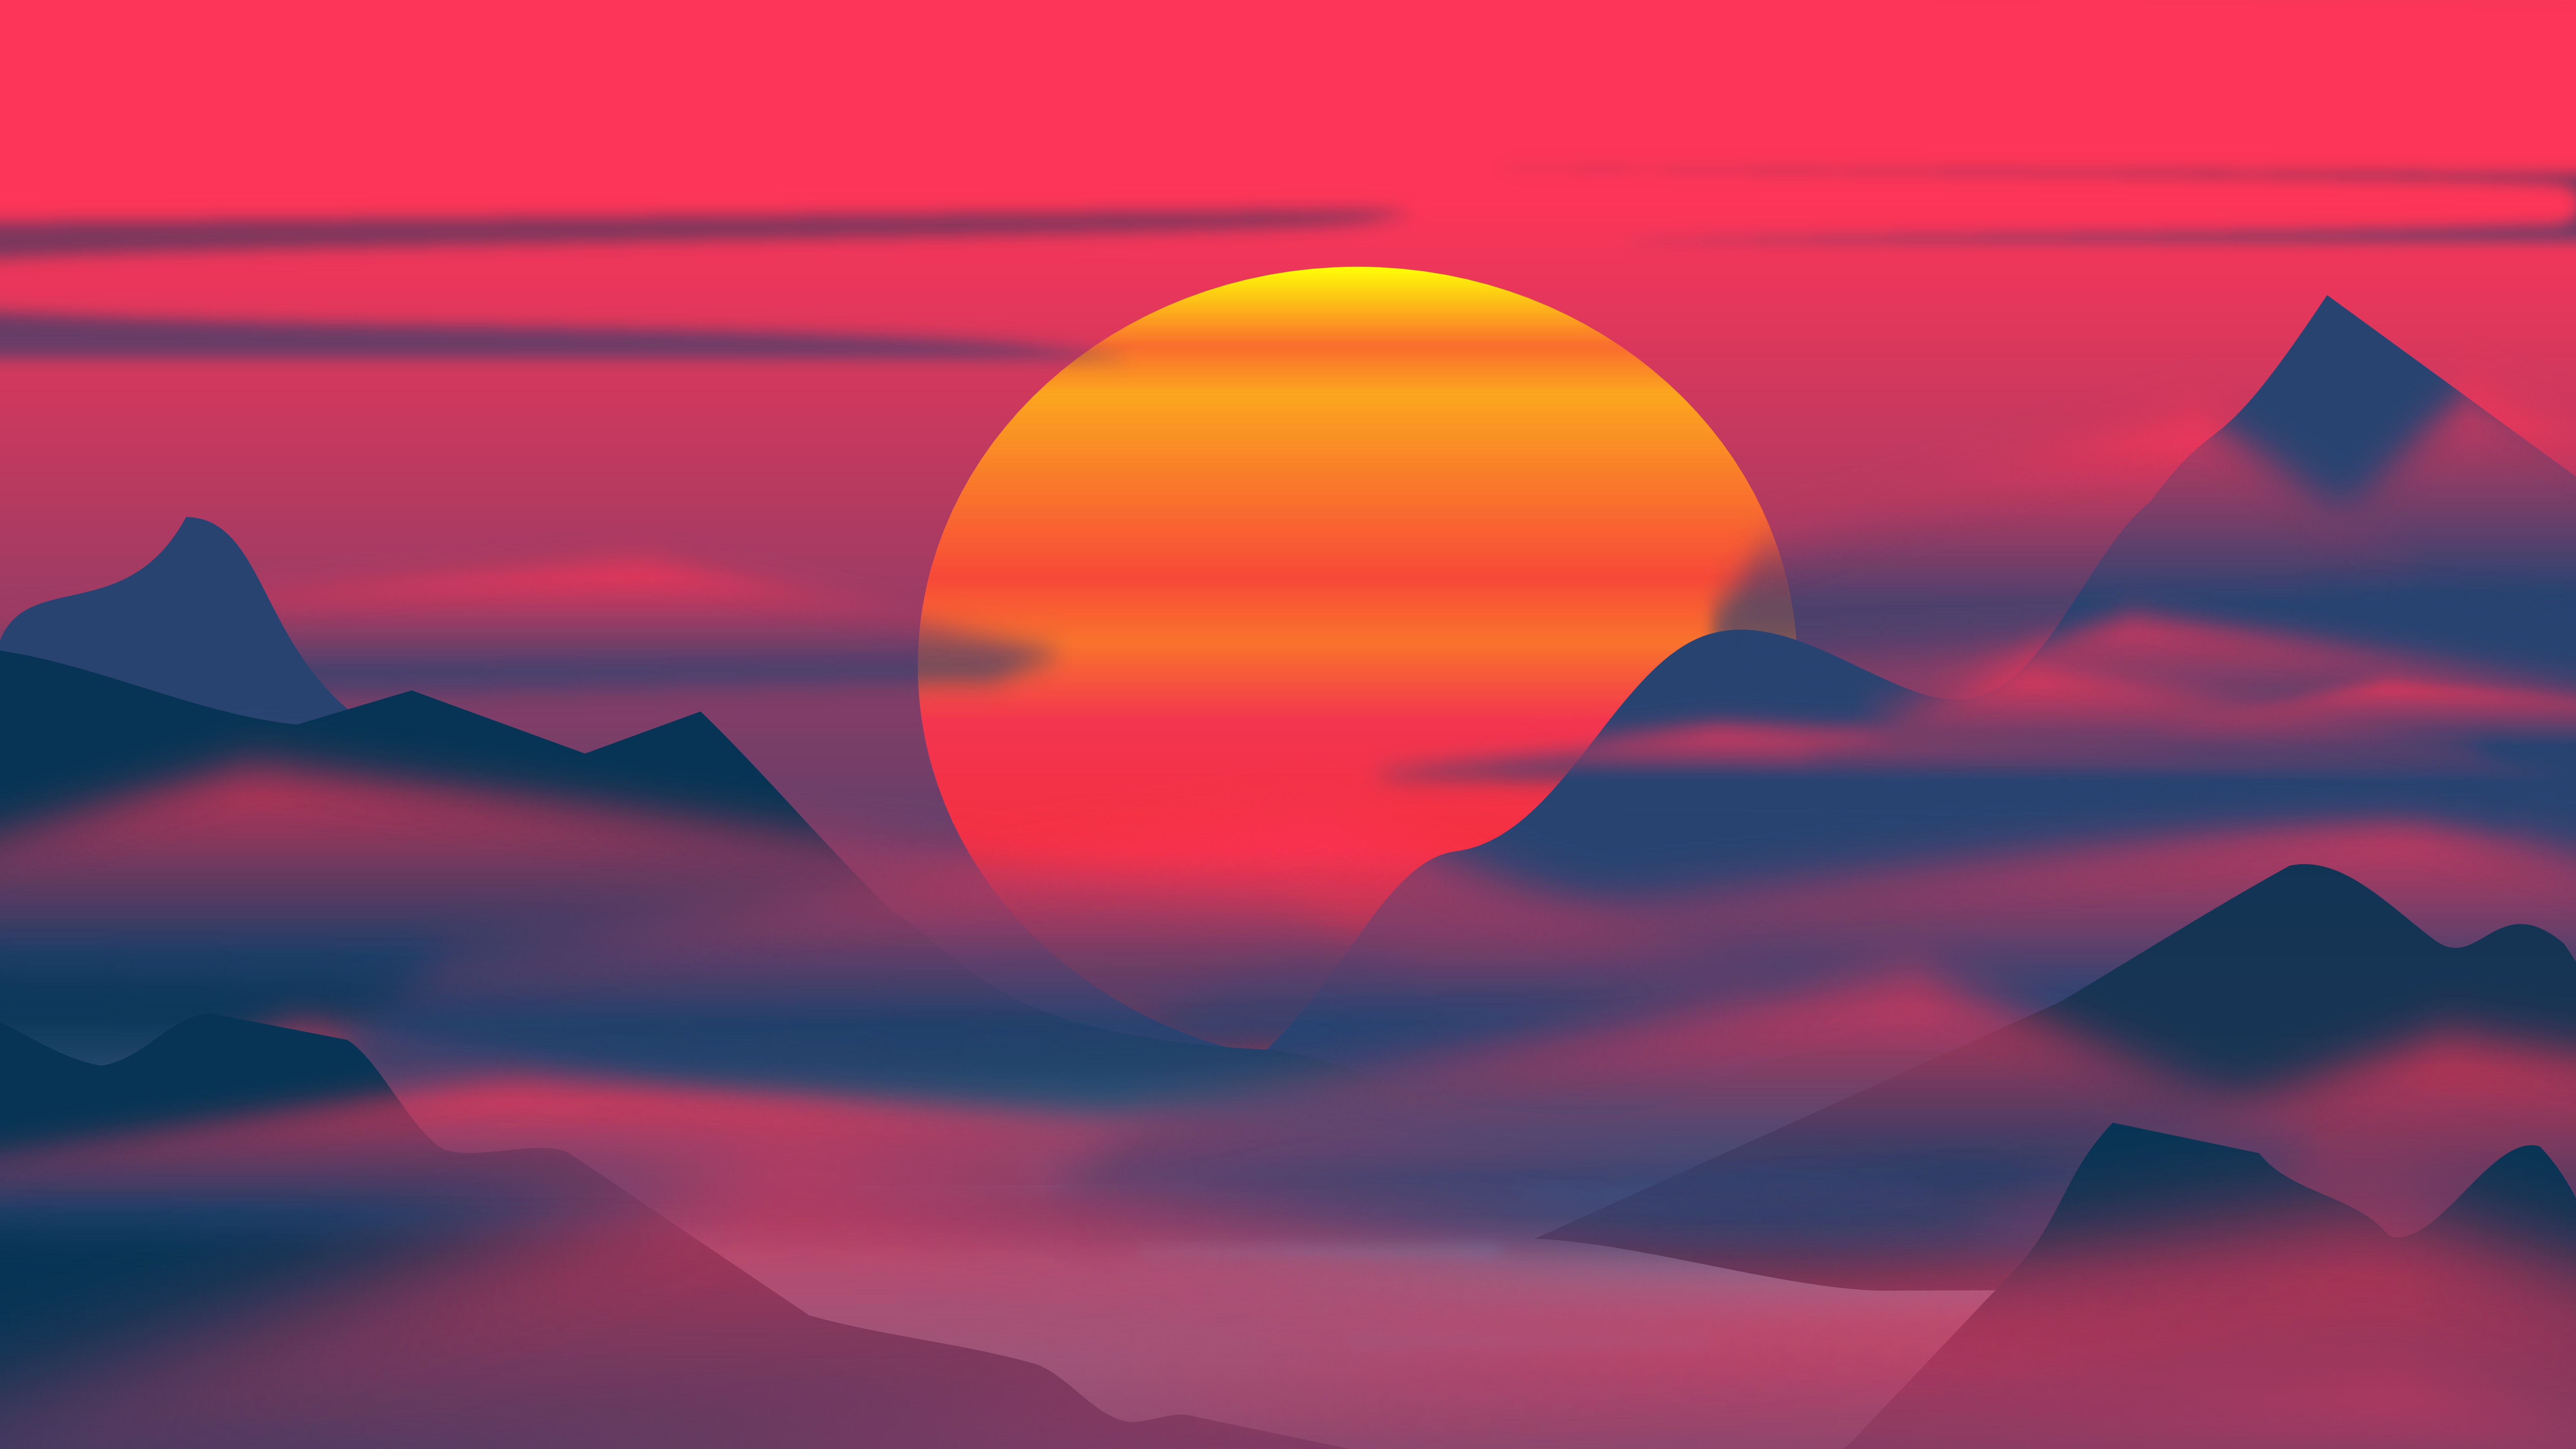 Sunrise Sunset Minimal 10k 8k HD 4k Wallpaper, Image, Background, Photo and Picture